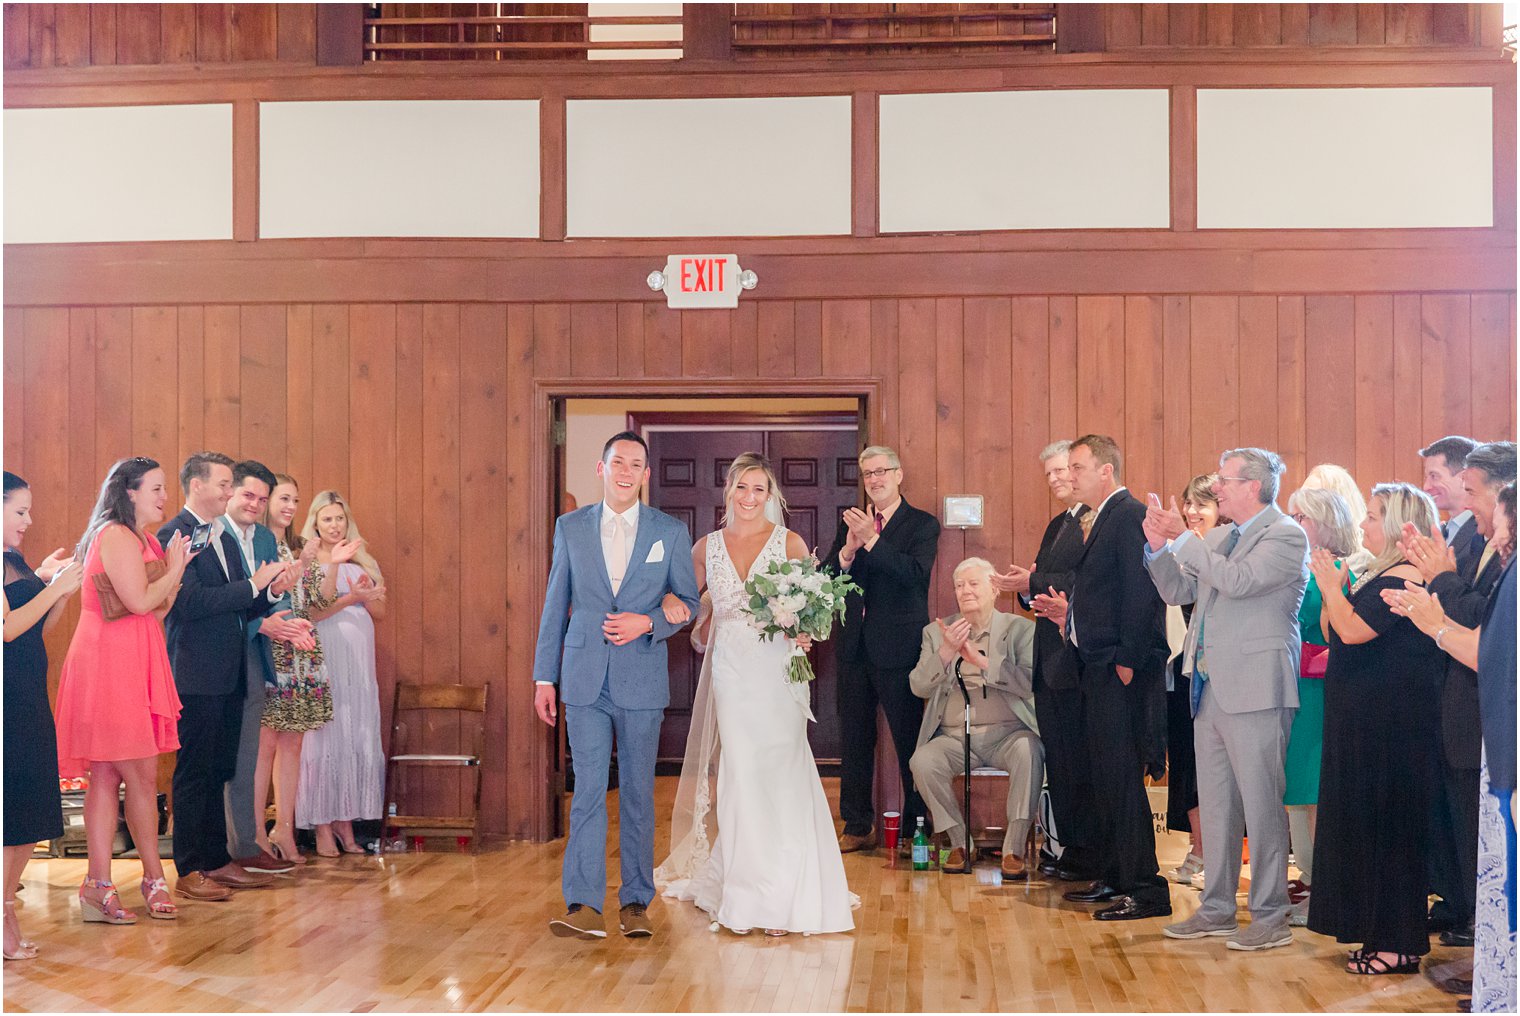 Sandy Hook Chapel wedding ceremony photographed by NJ wedding photographer Idalia Photography